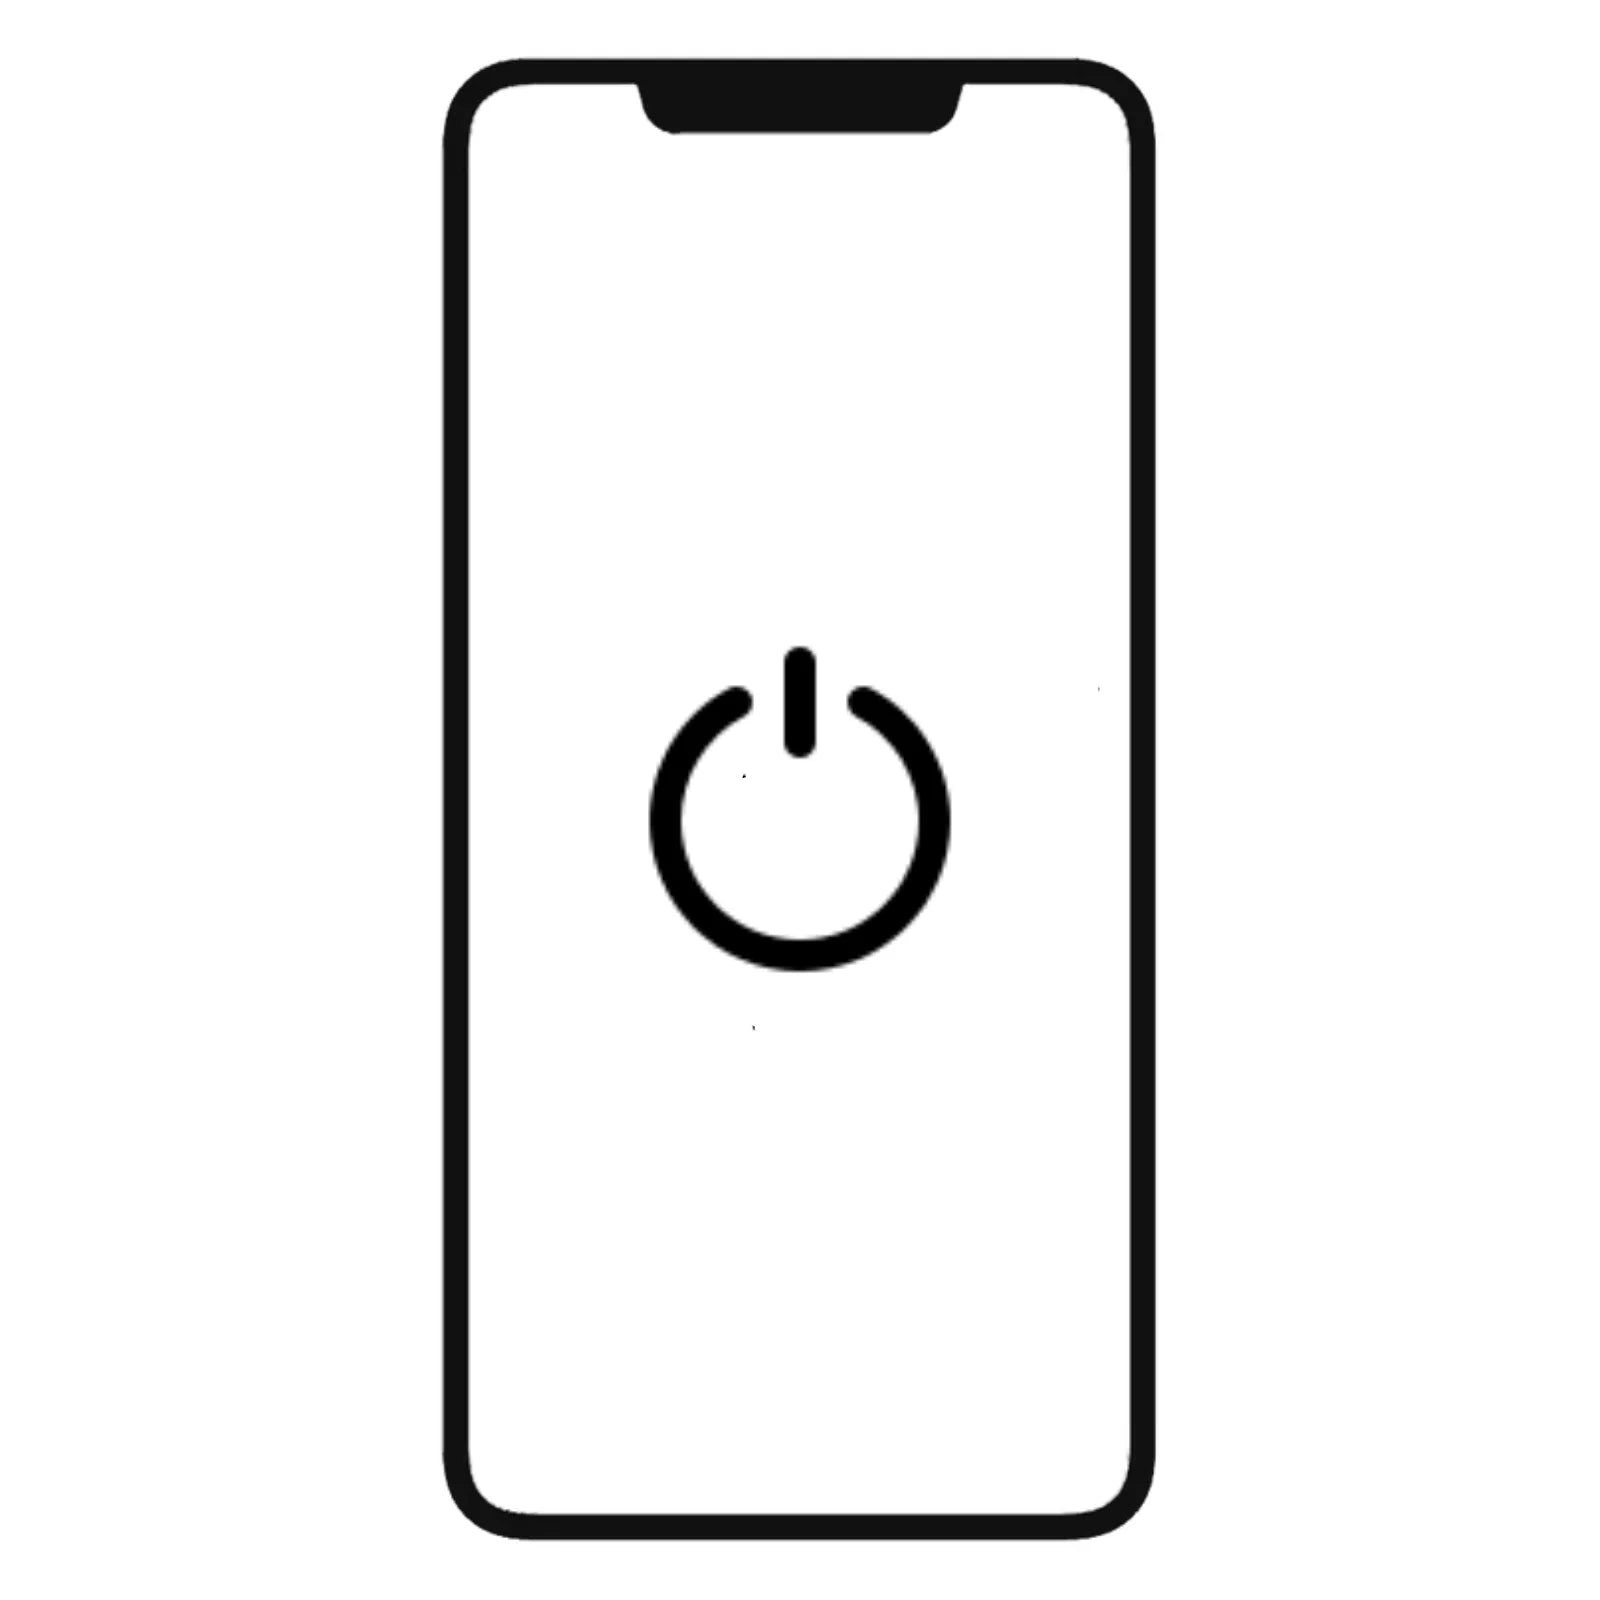 iPhone 12 Pro Max Power Button Repair